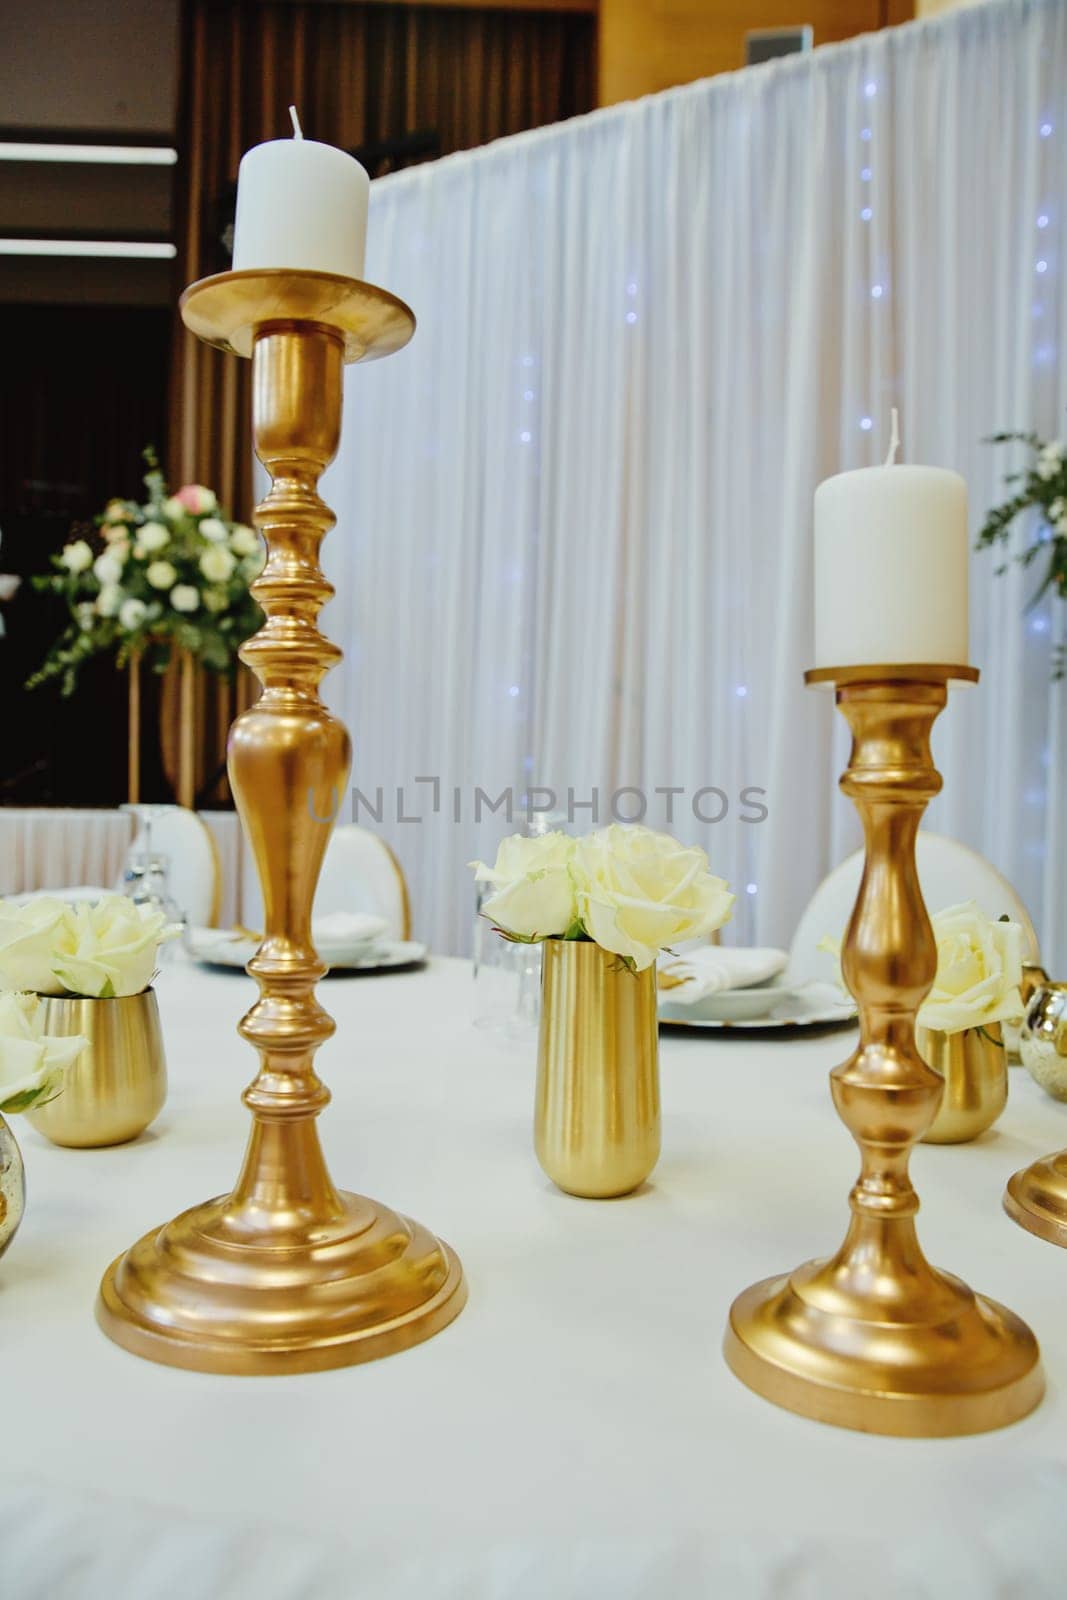 Gilded candlestick on a festive wedding table. Elegance wedding decor.